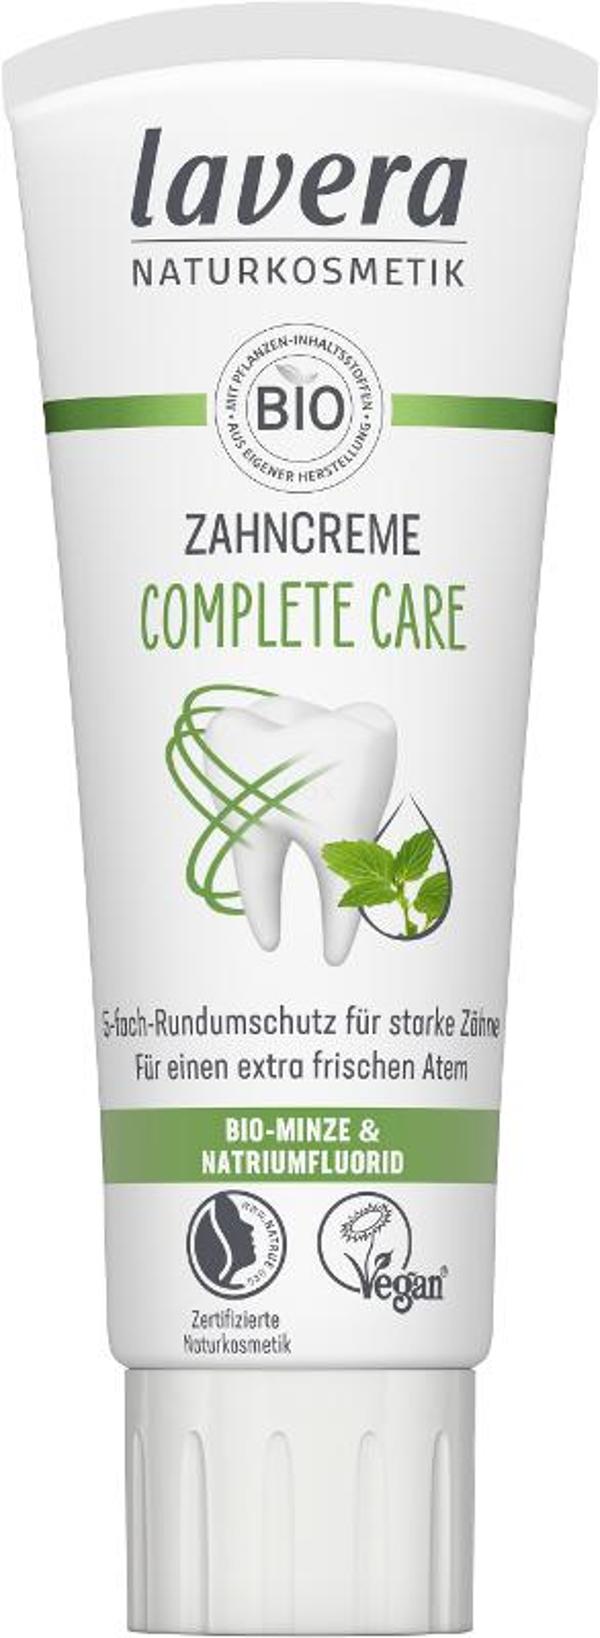 Produktfoto zu Zahncreme Complete Care 75ml